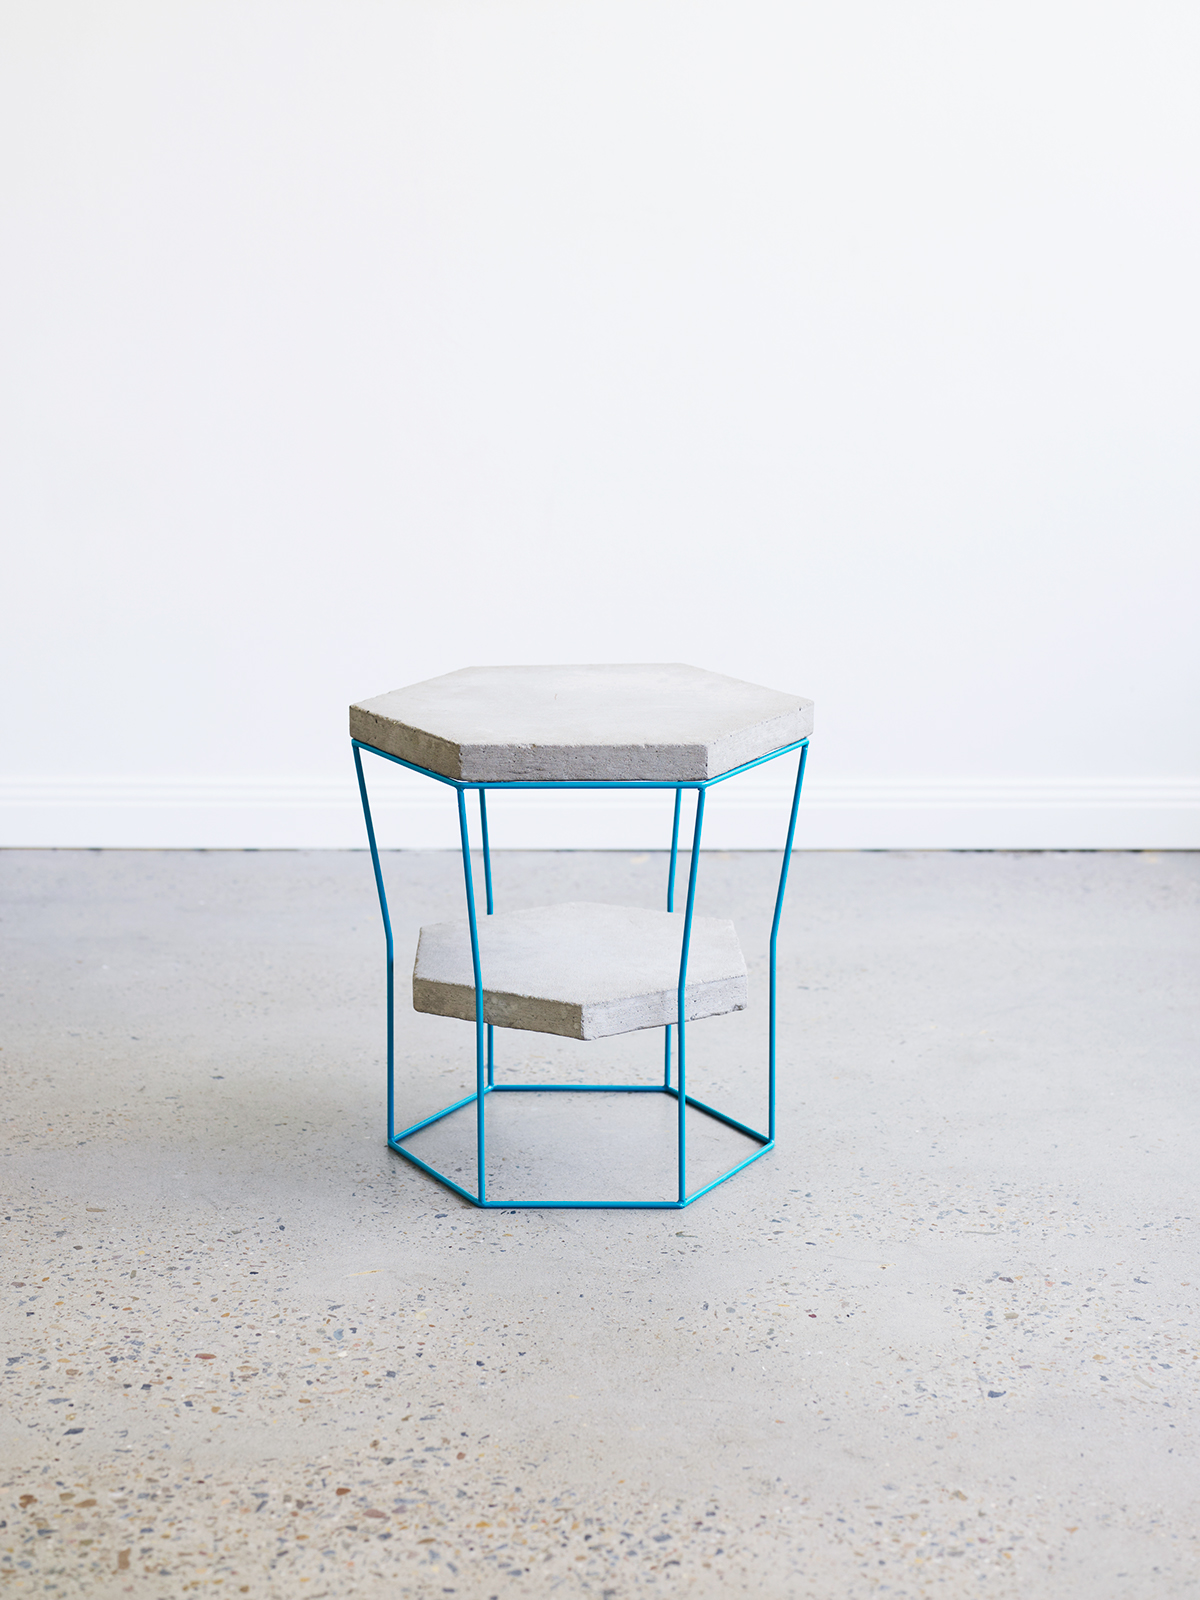 hexagon side table stool chair design table design metal rod Powdercoat concrete australian cedar resin planters vases Ply plywood